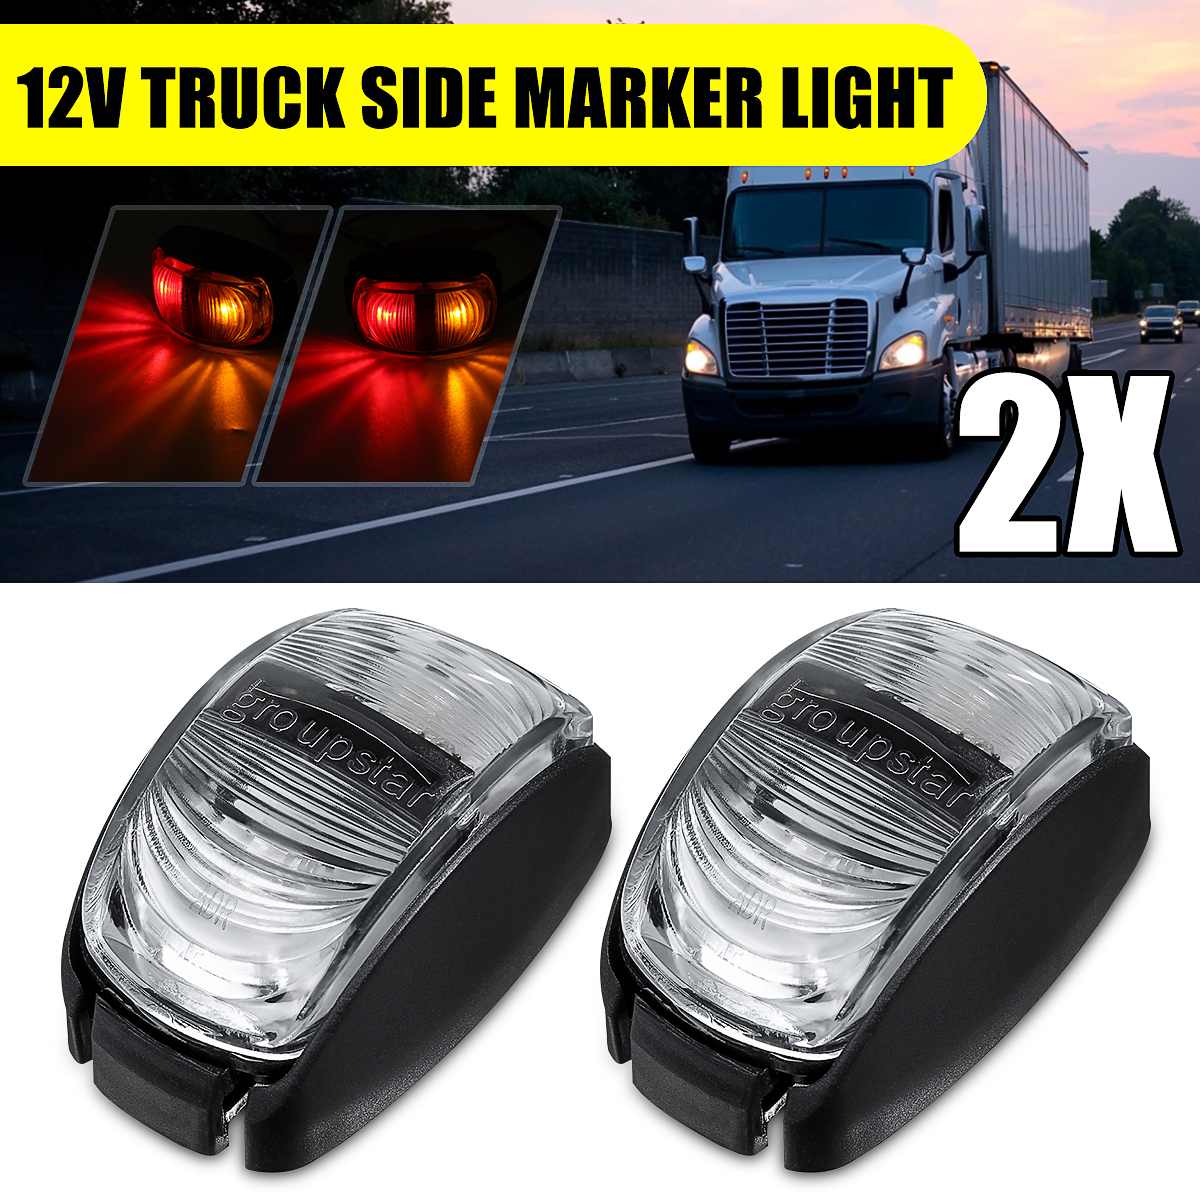 2 Stuks 12V Led Auto Truck Side Marker Klaring Lamp Achterlicht Signaal Indicatoren Lampen Auto Trailer Vrachtwagen Van suv